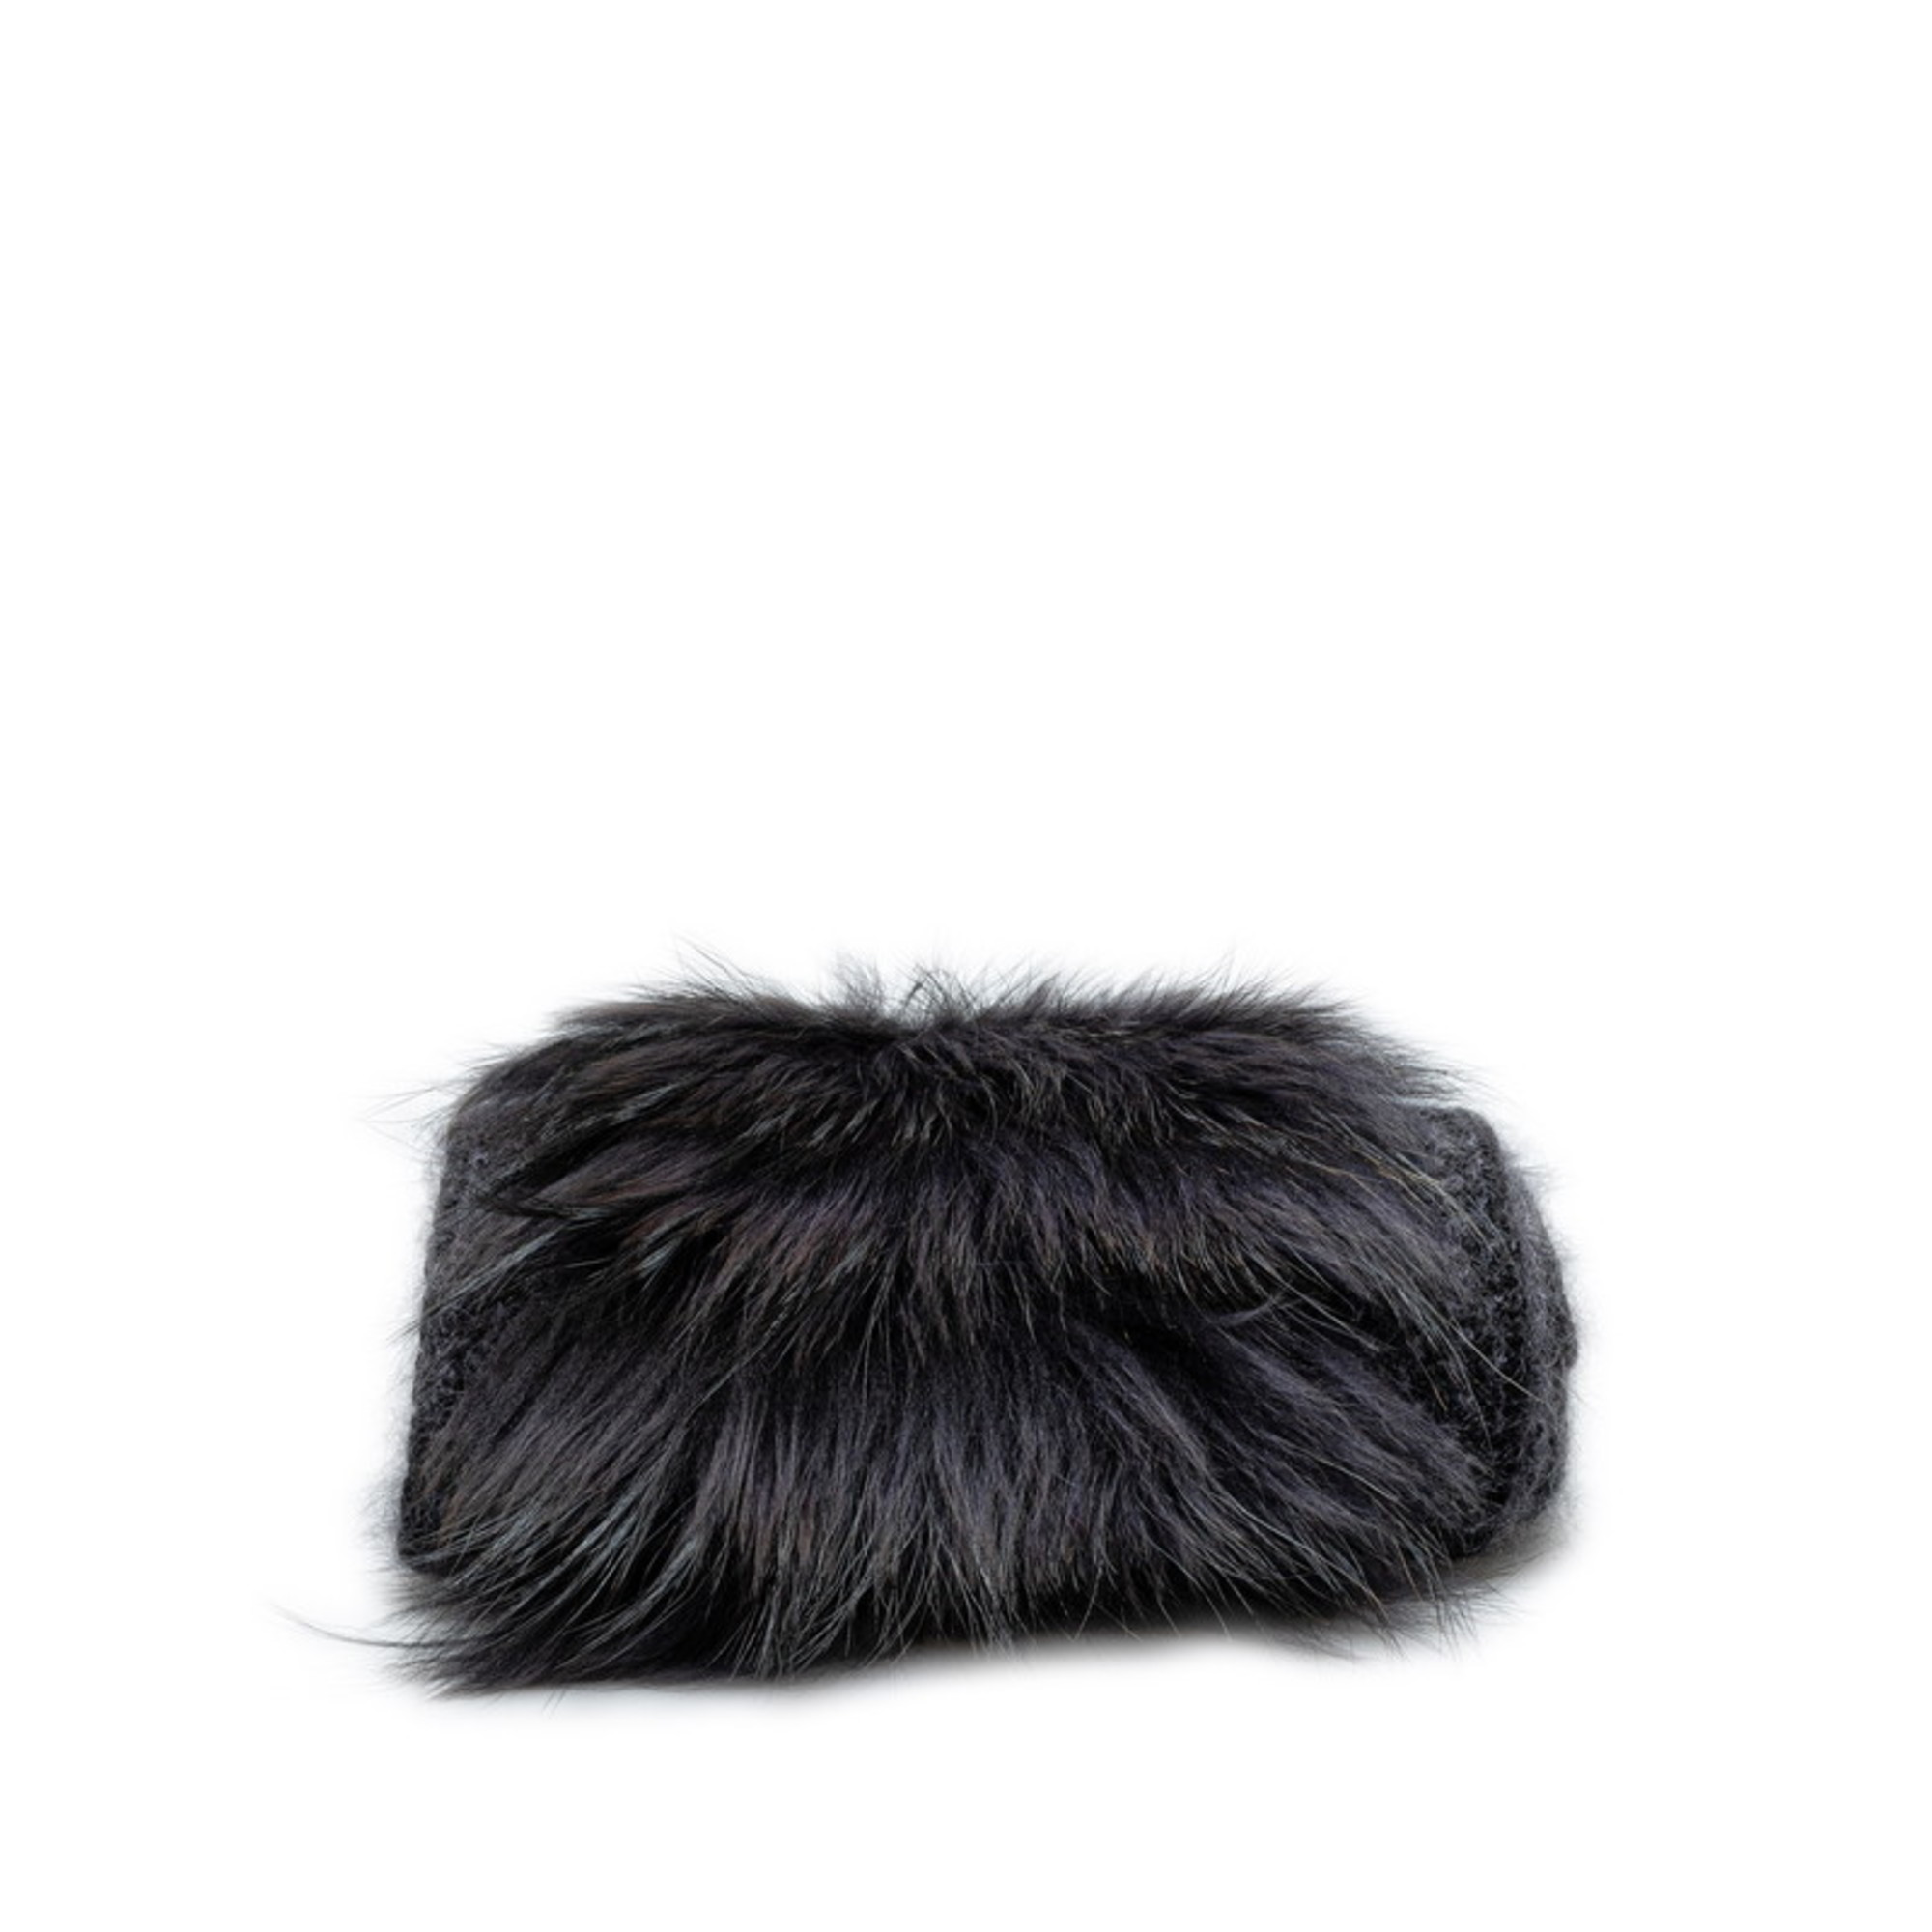 Louis Vuitton Echarpe Elena Scarf M75091 Black Grey Wool Fur Silk Women's LOUIS VUITTON